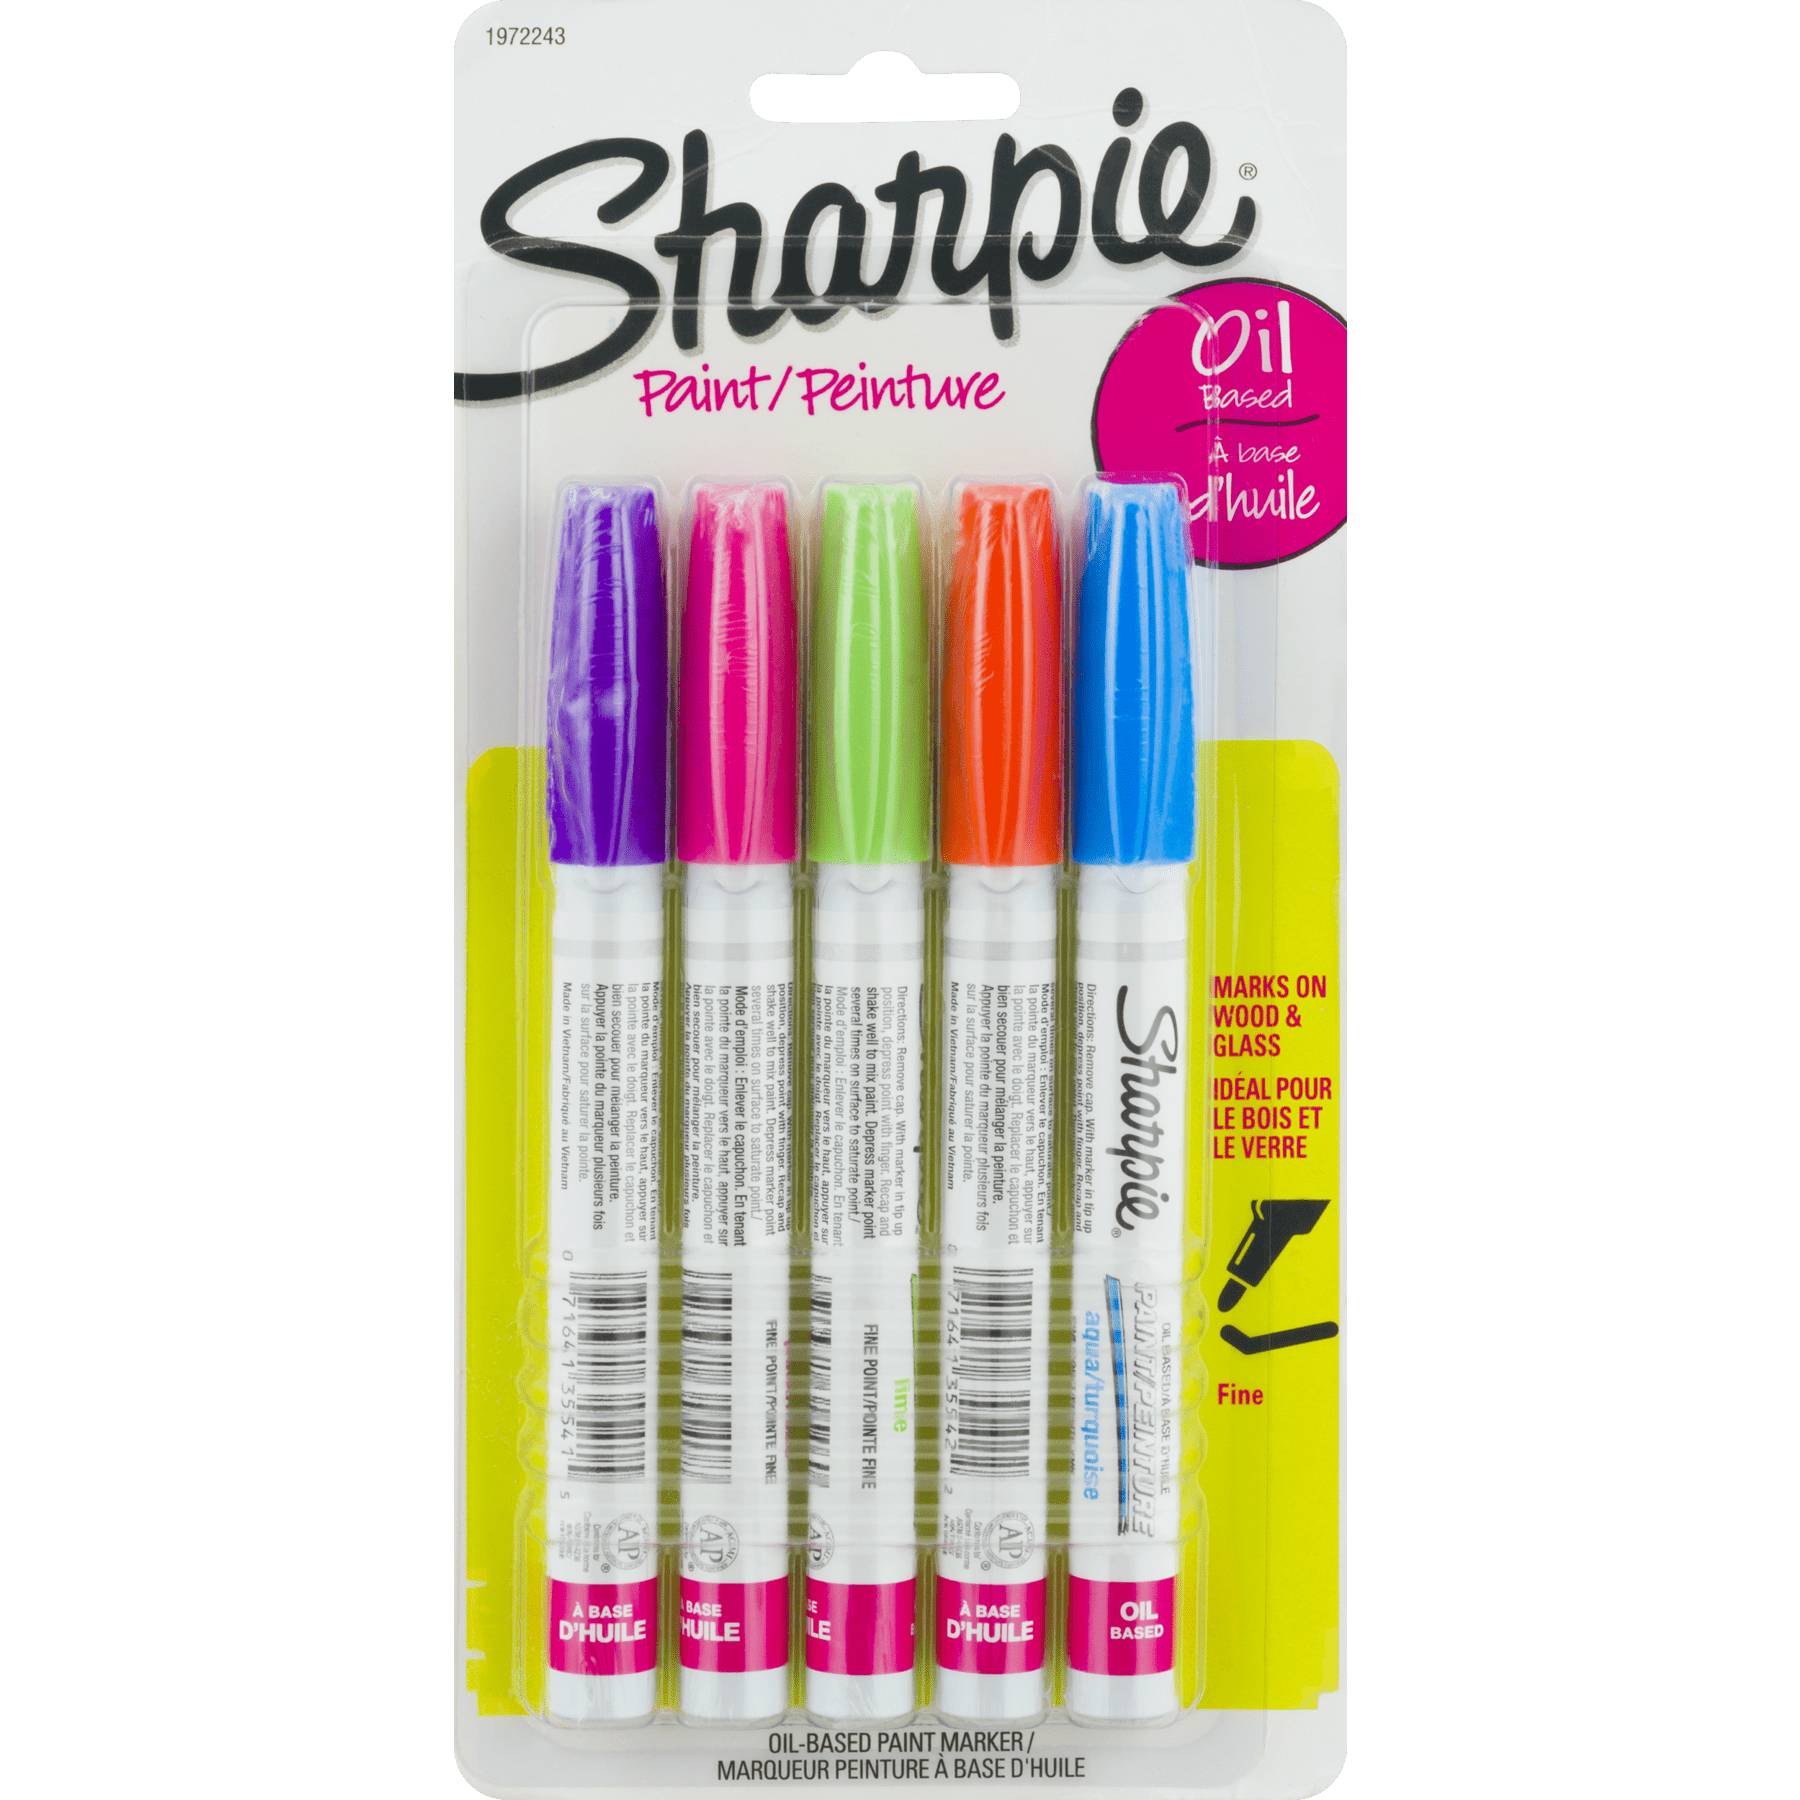 Sharpie Bright Fine Point Paint Markers, 5 Piece